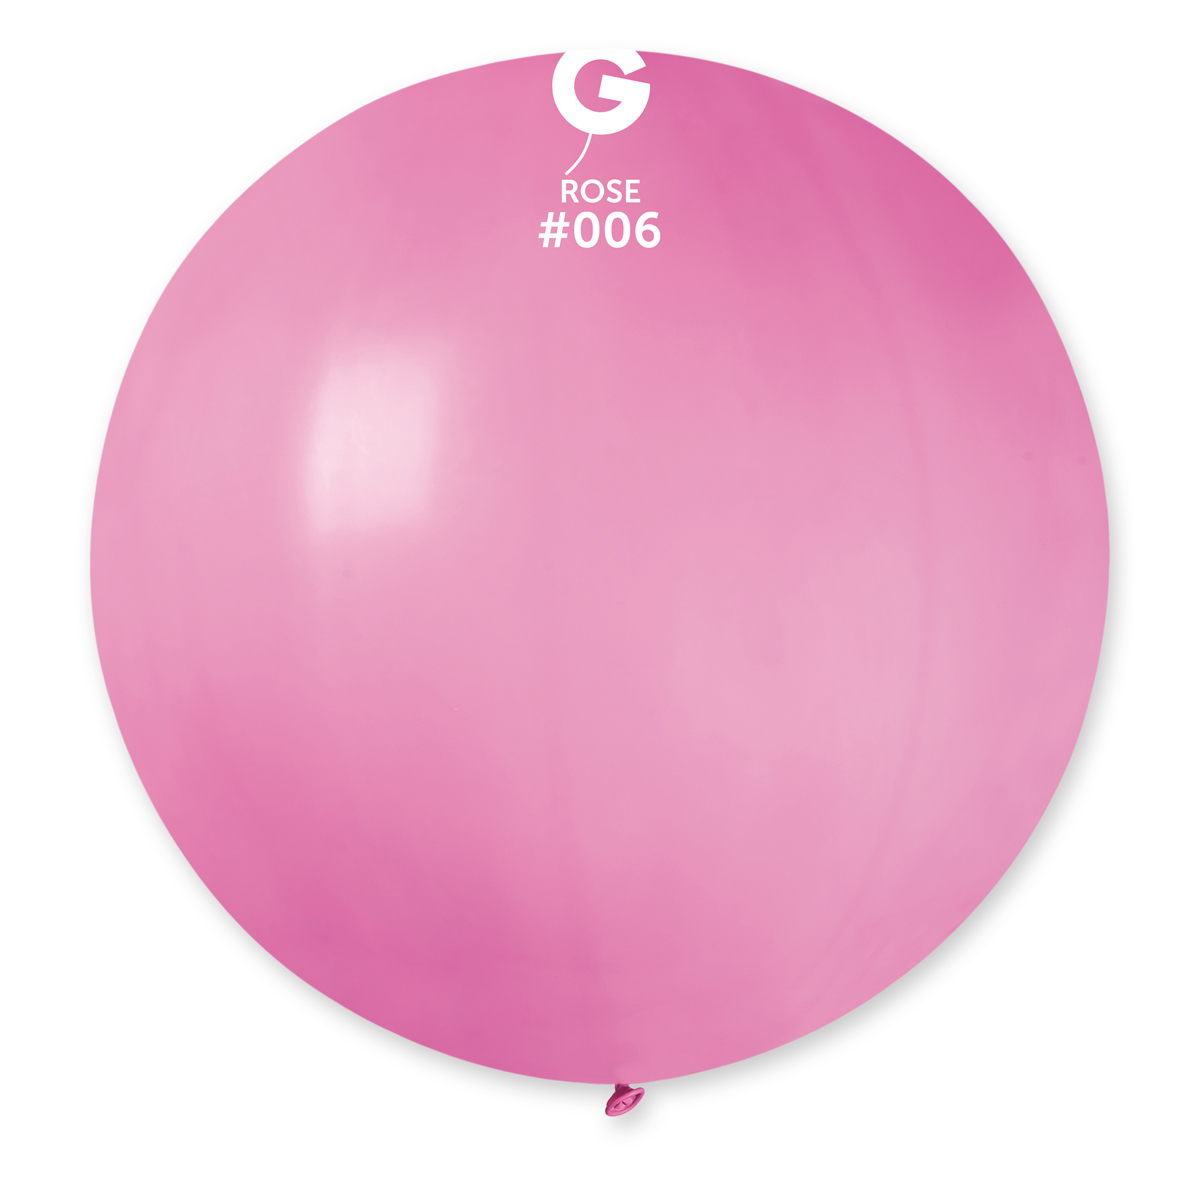 Gemar Kulatý pastelový balónek 80 cm růžový